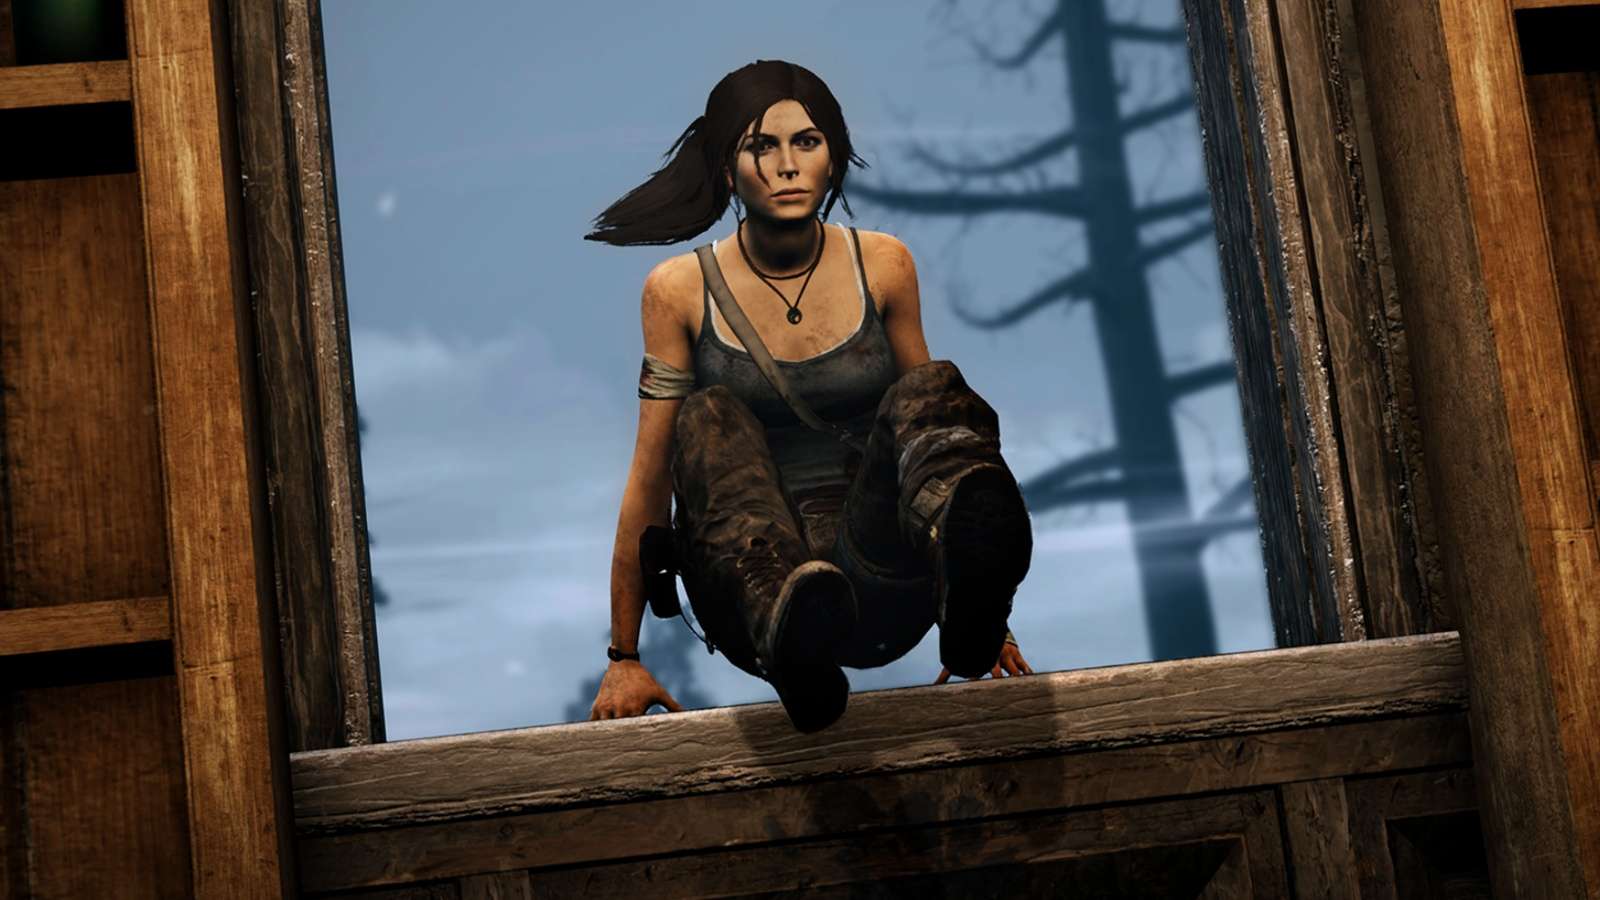 A screenshot featuring Lara Croft in Dead by Daylight.